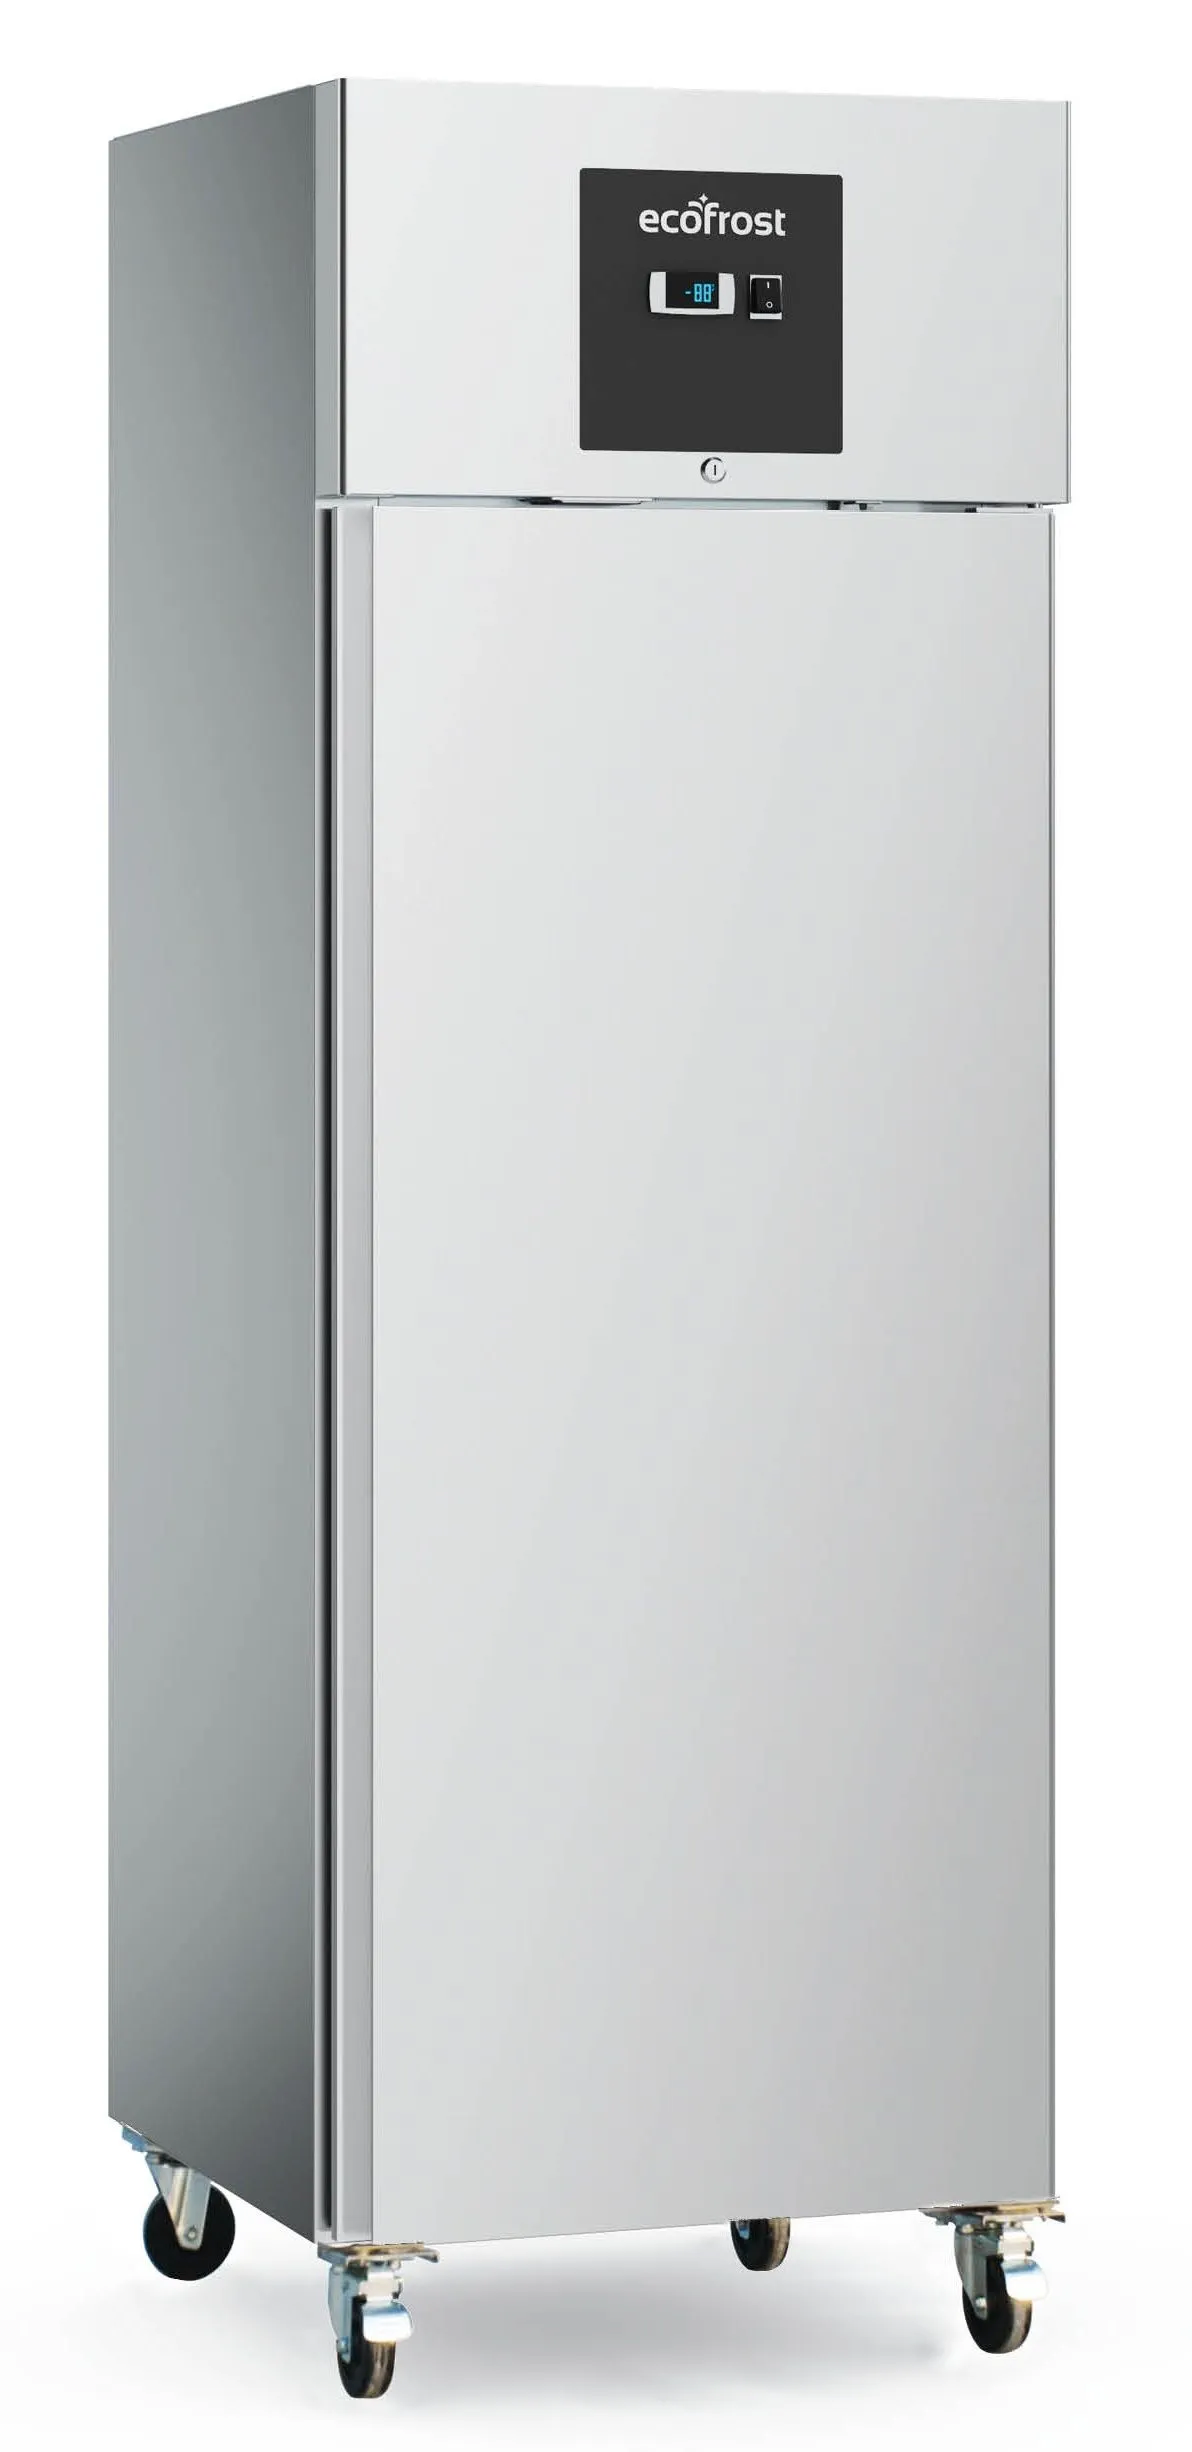 Ecofrost Stainless Steel Freezer 400 Litre